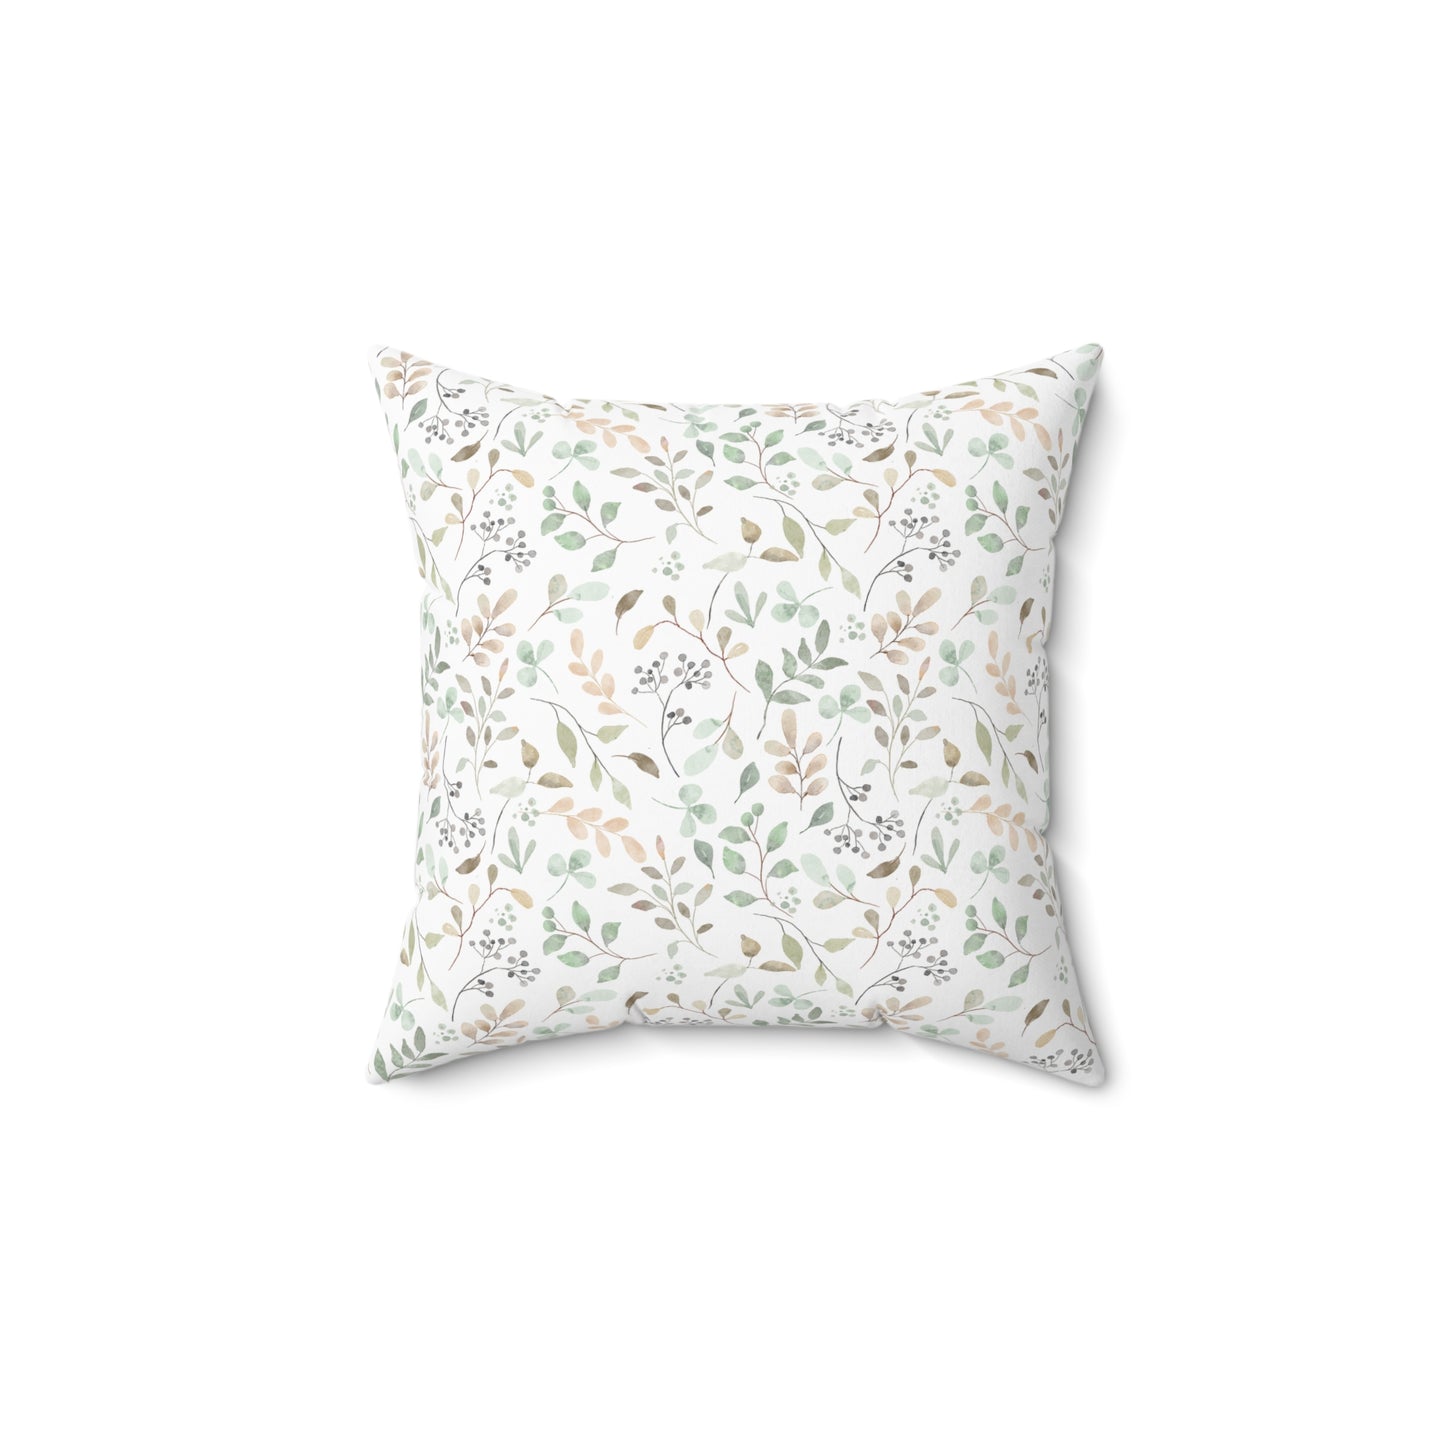 Square Pillow - Leaf pattern